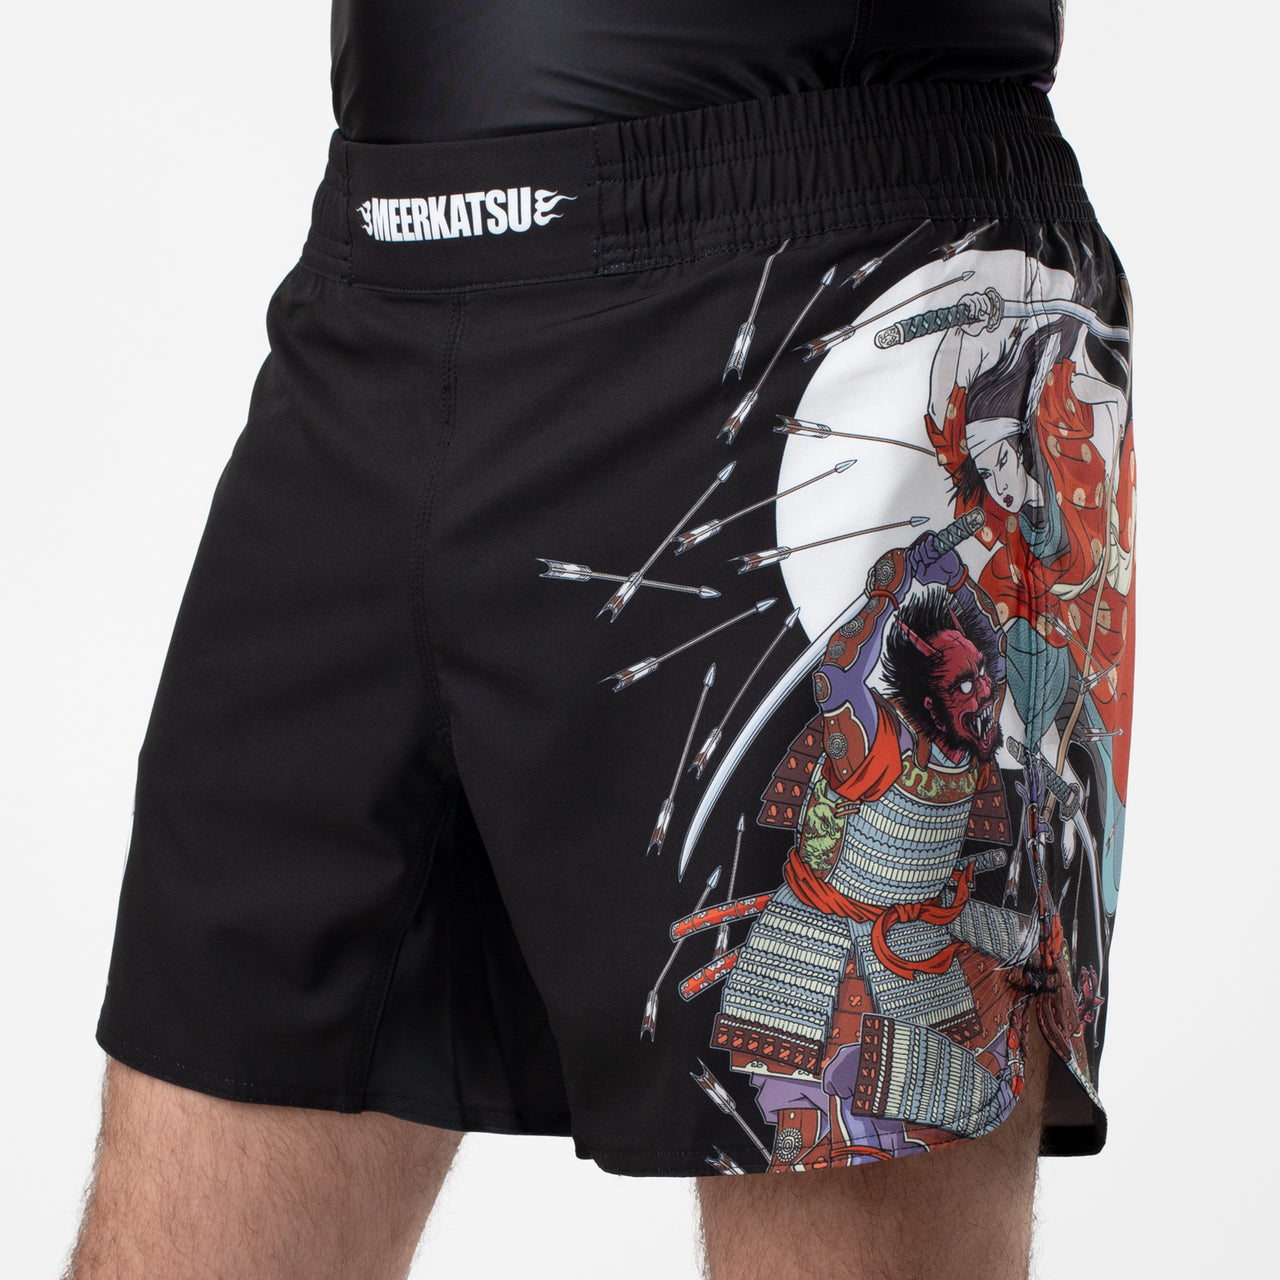 Meerkatsu "Demon Hunter" Shorts